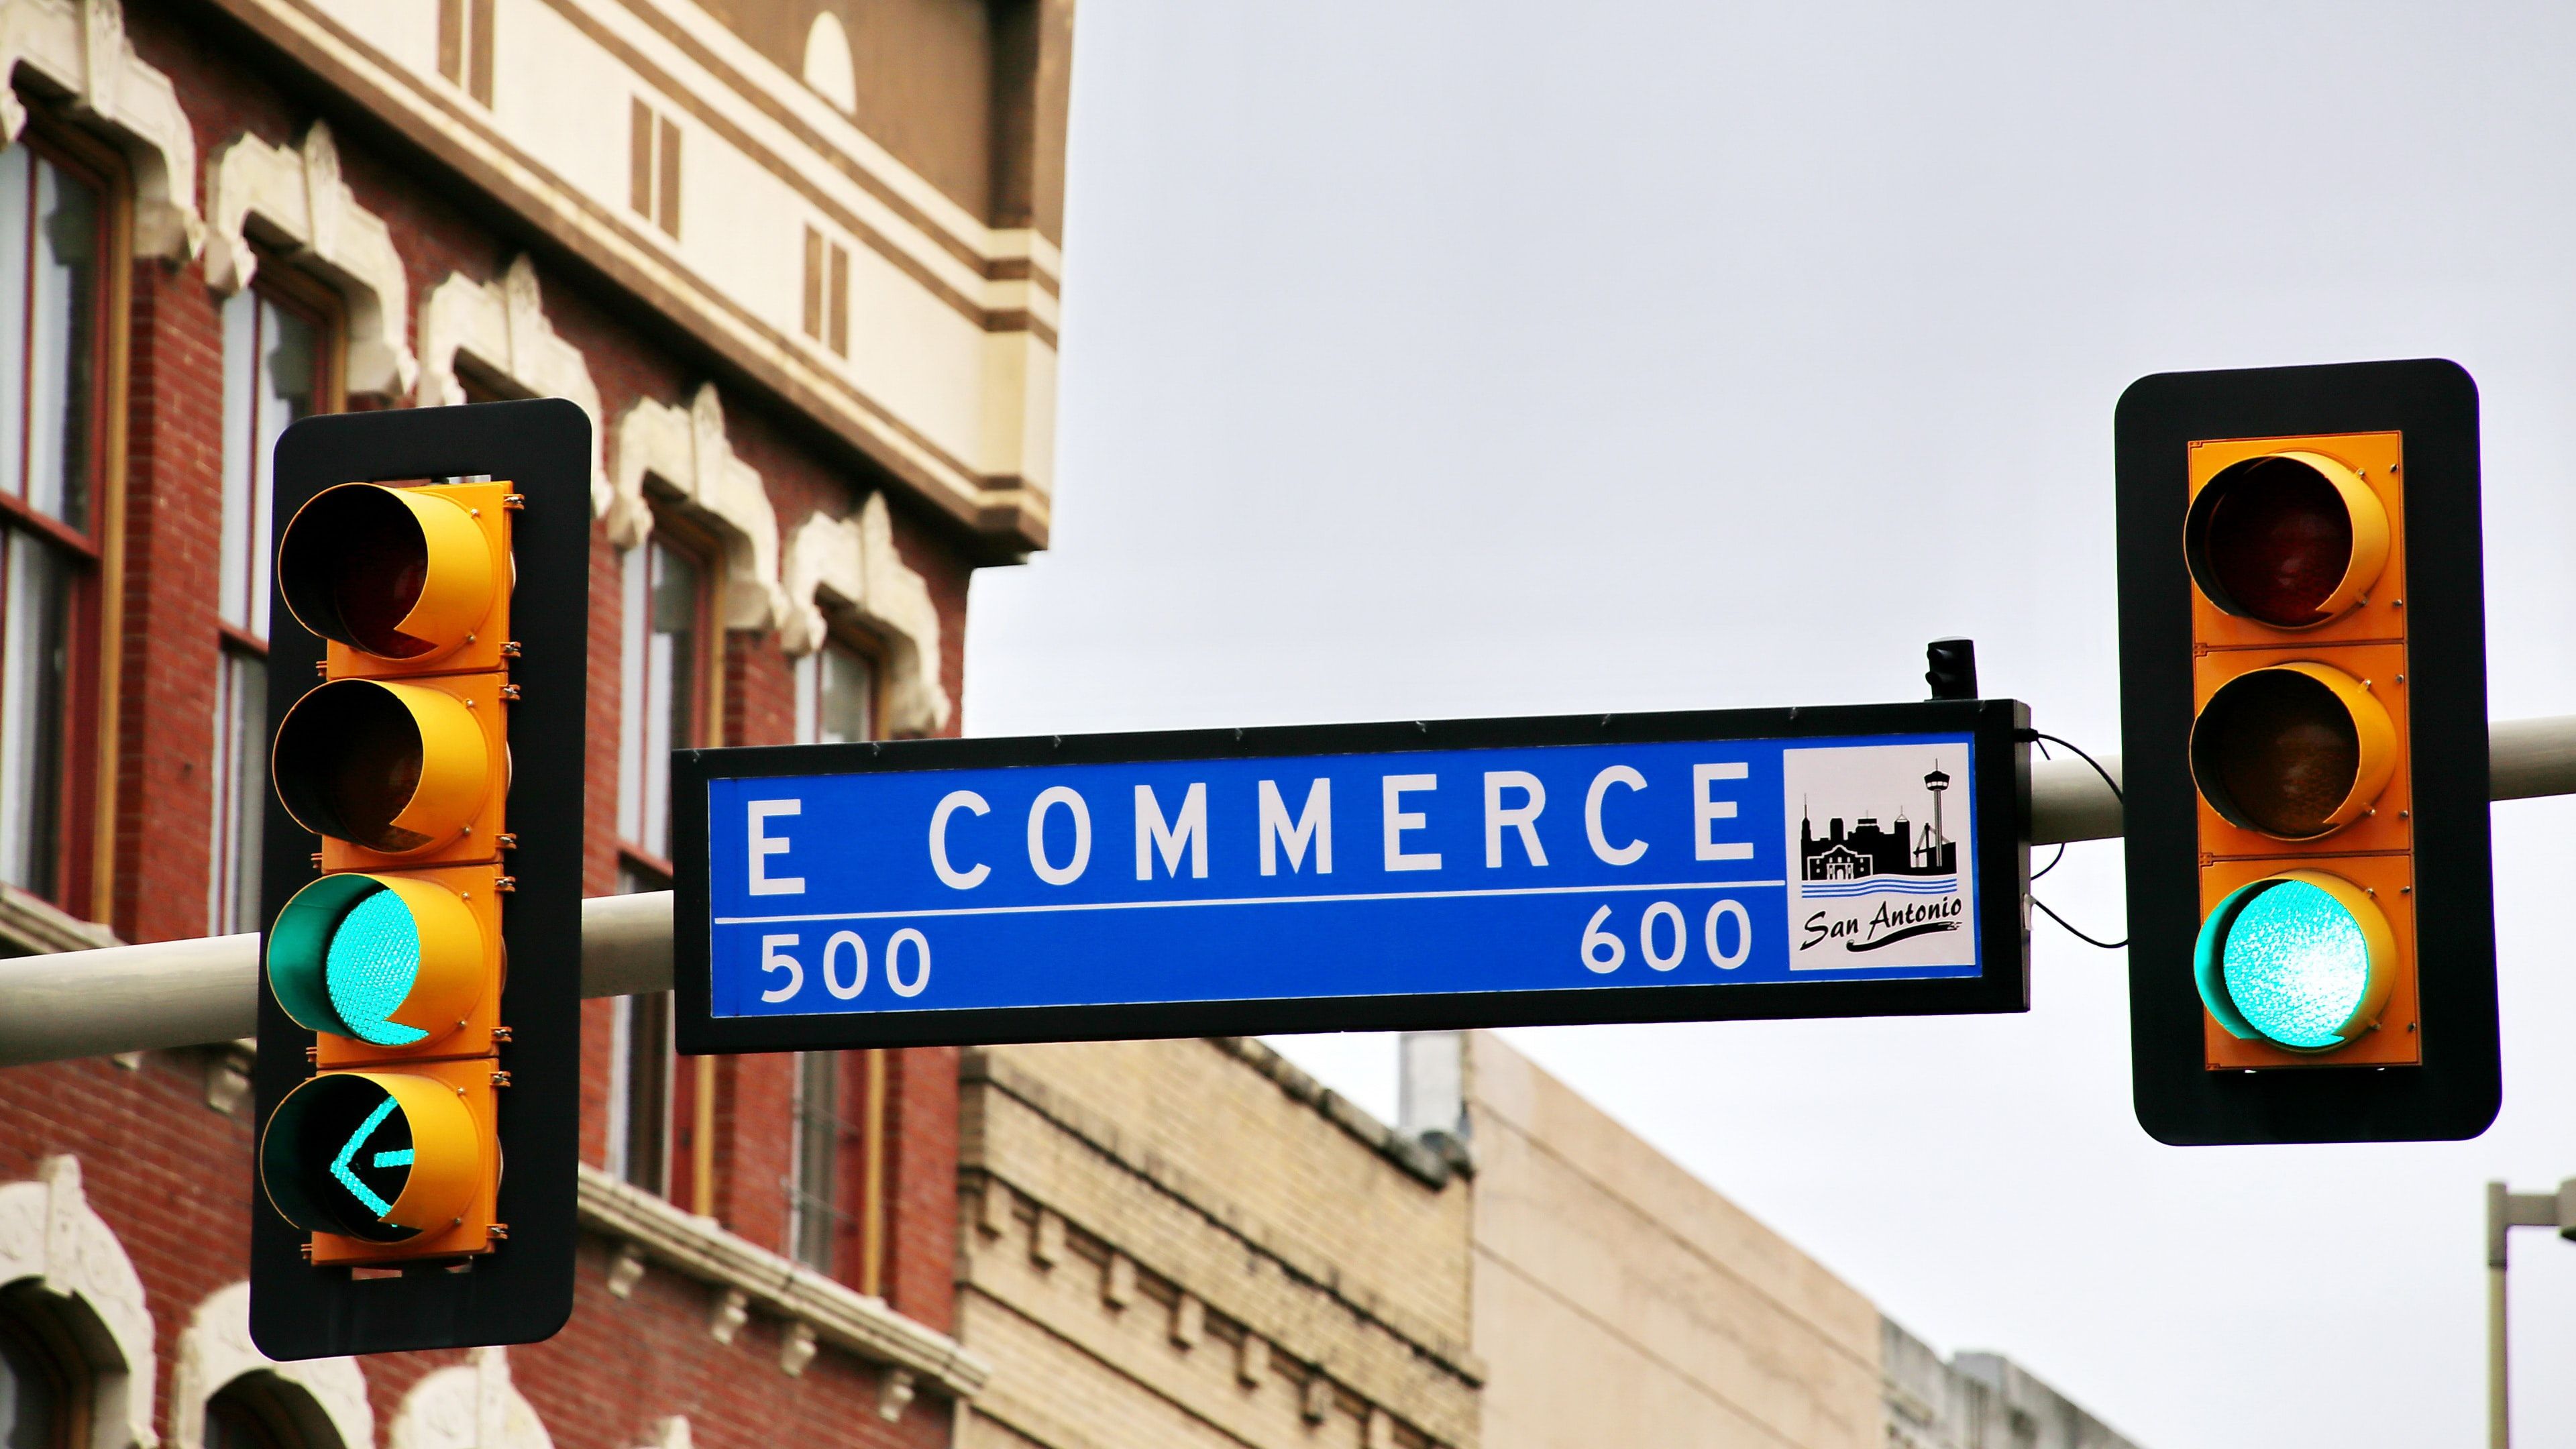 East Commerce Street in San Antonio, Texas